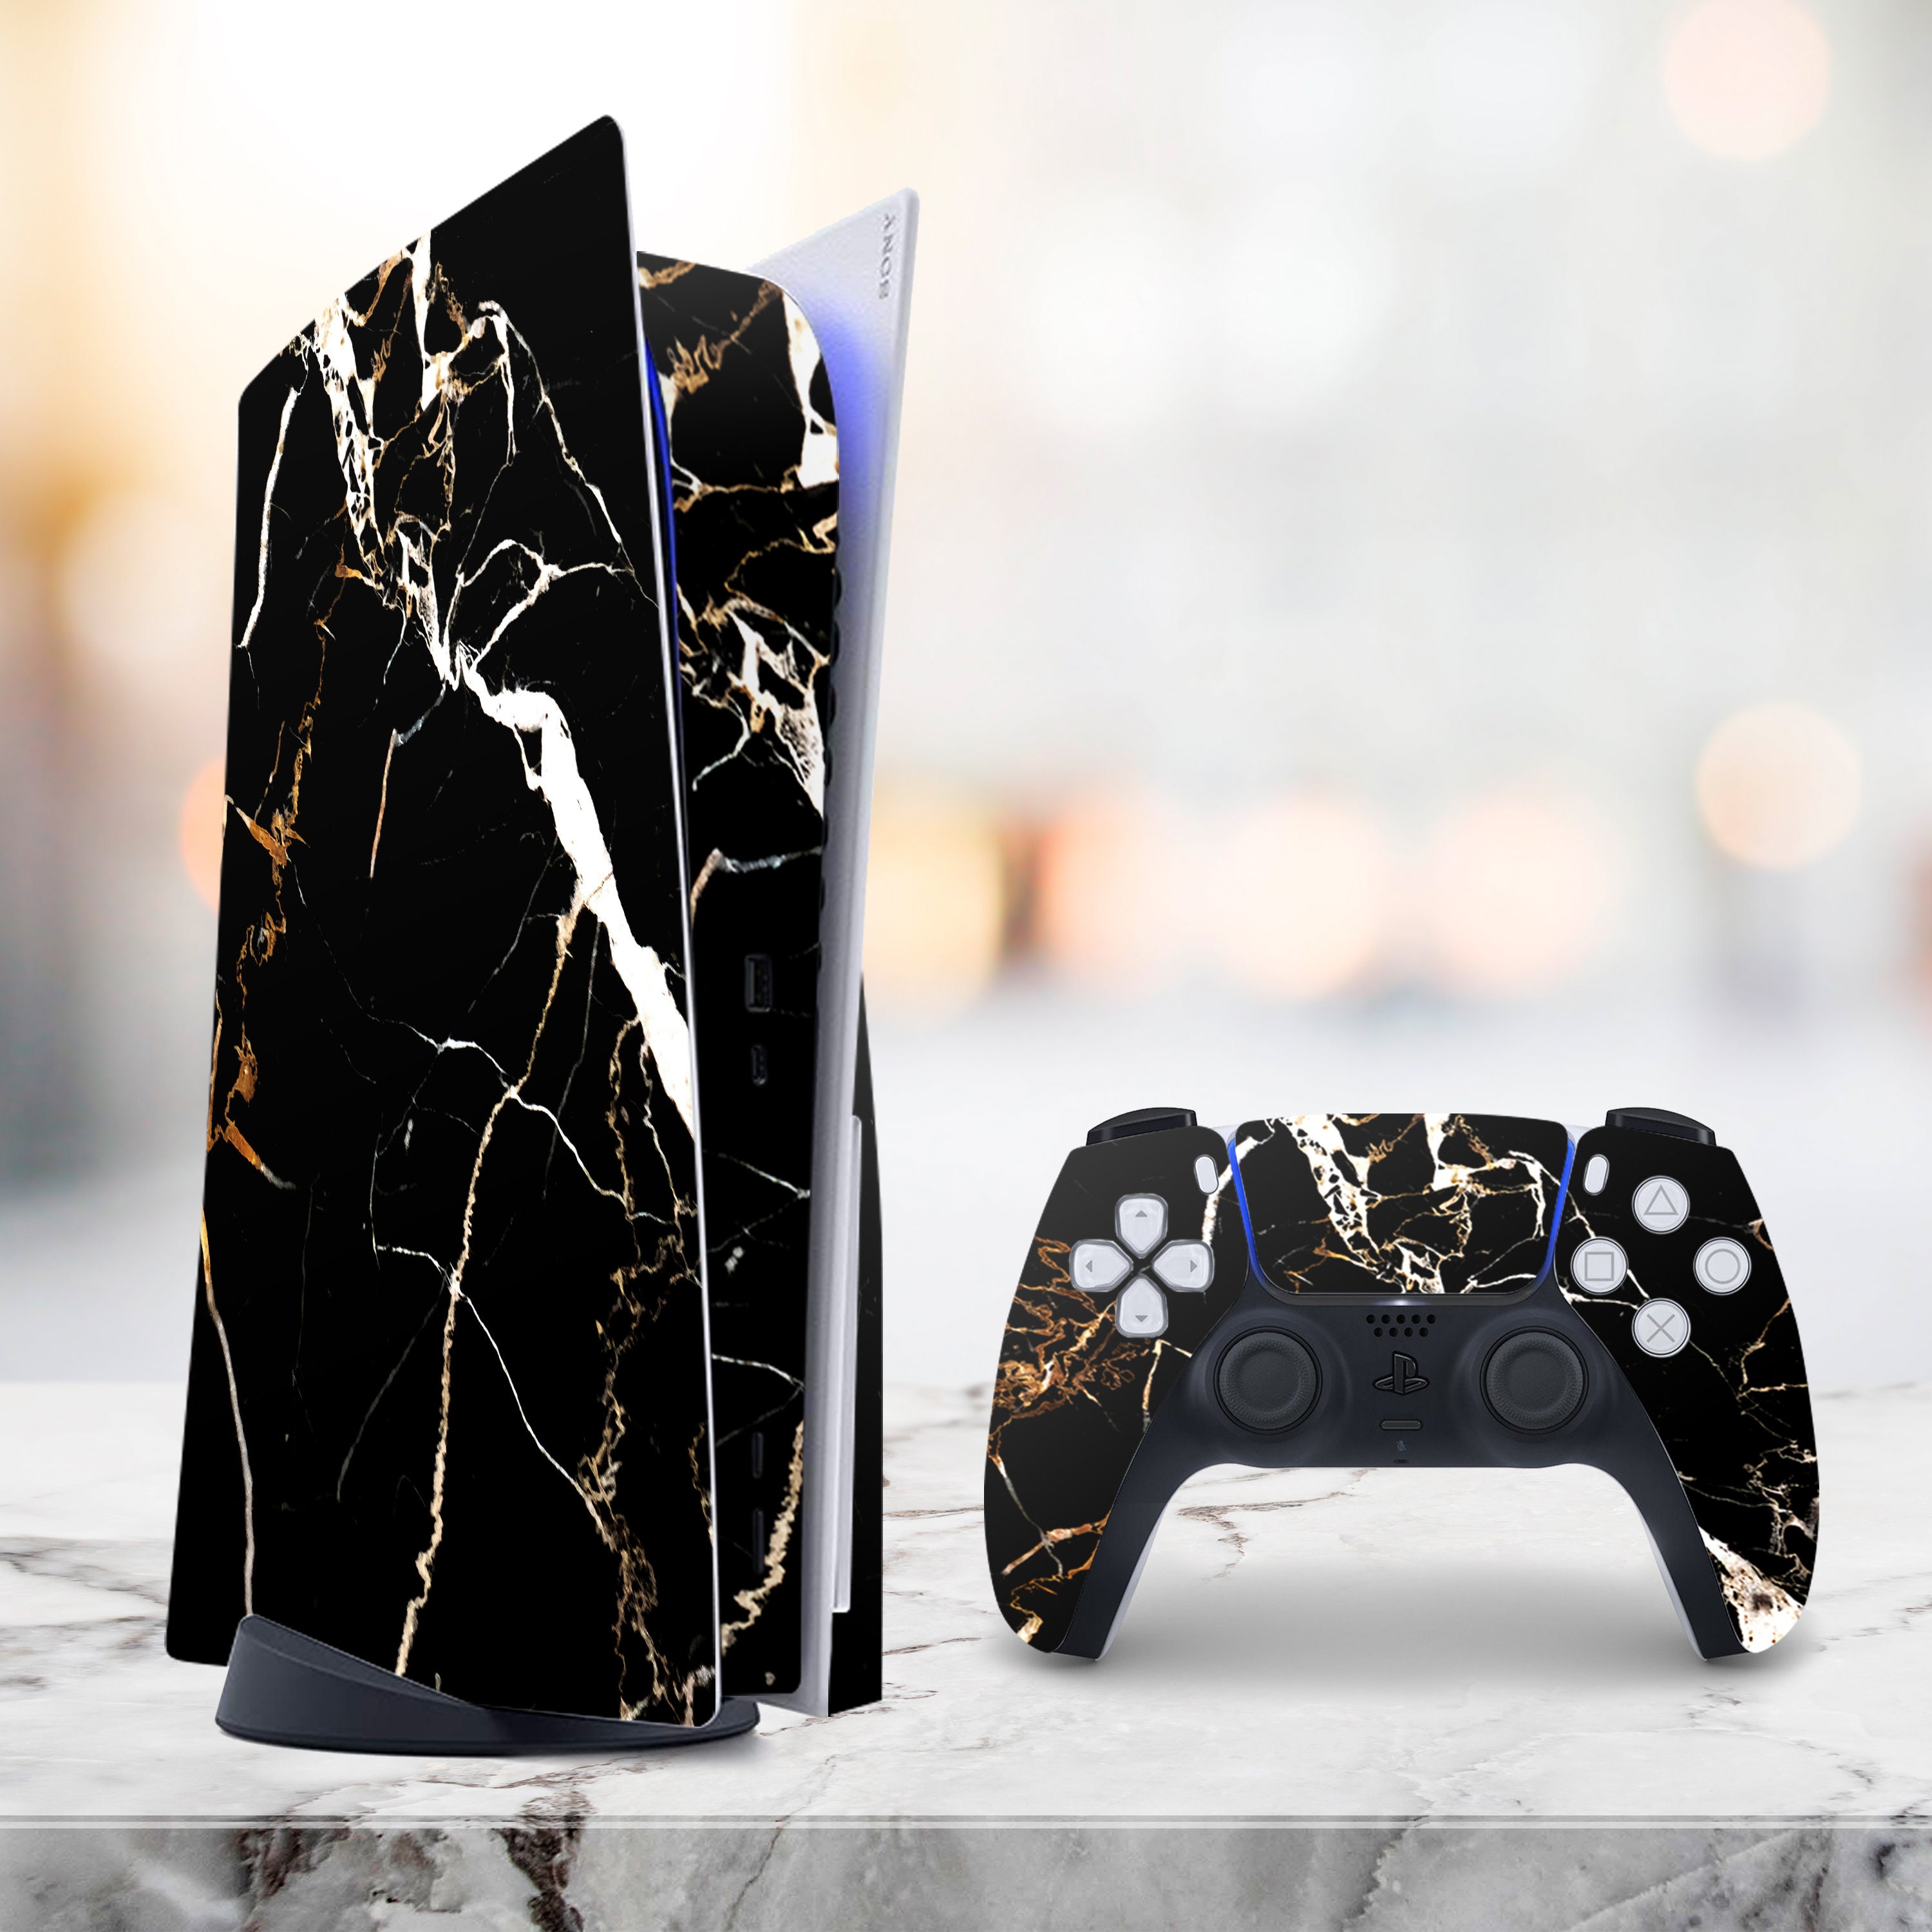 PS5 DualSense Controller Skin Gold Marble Elegance